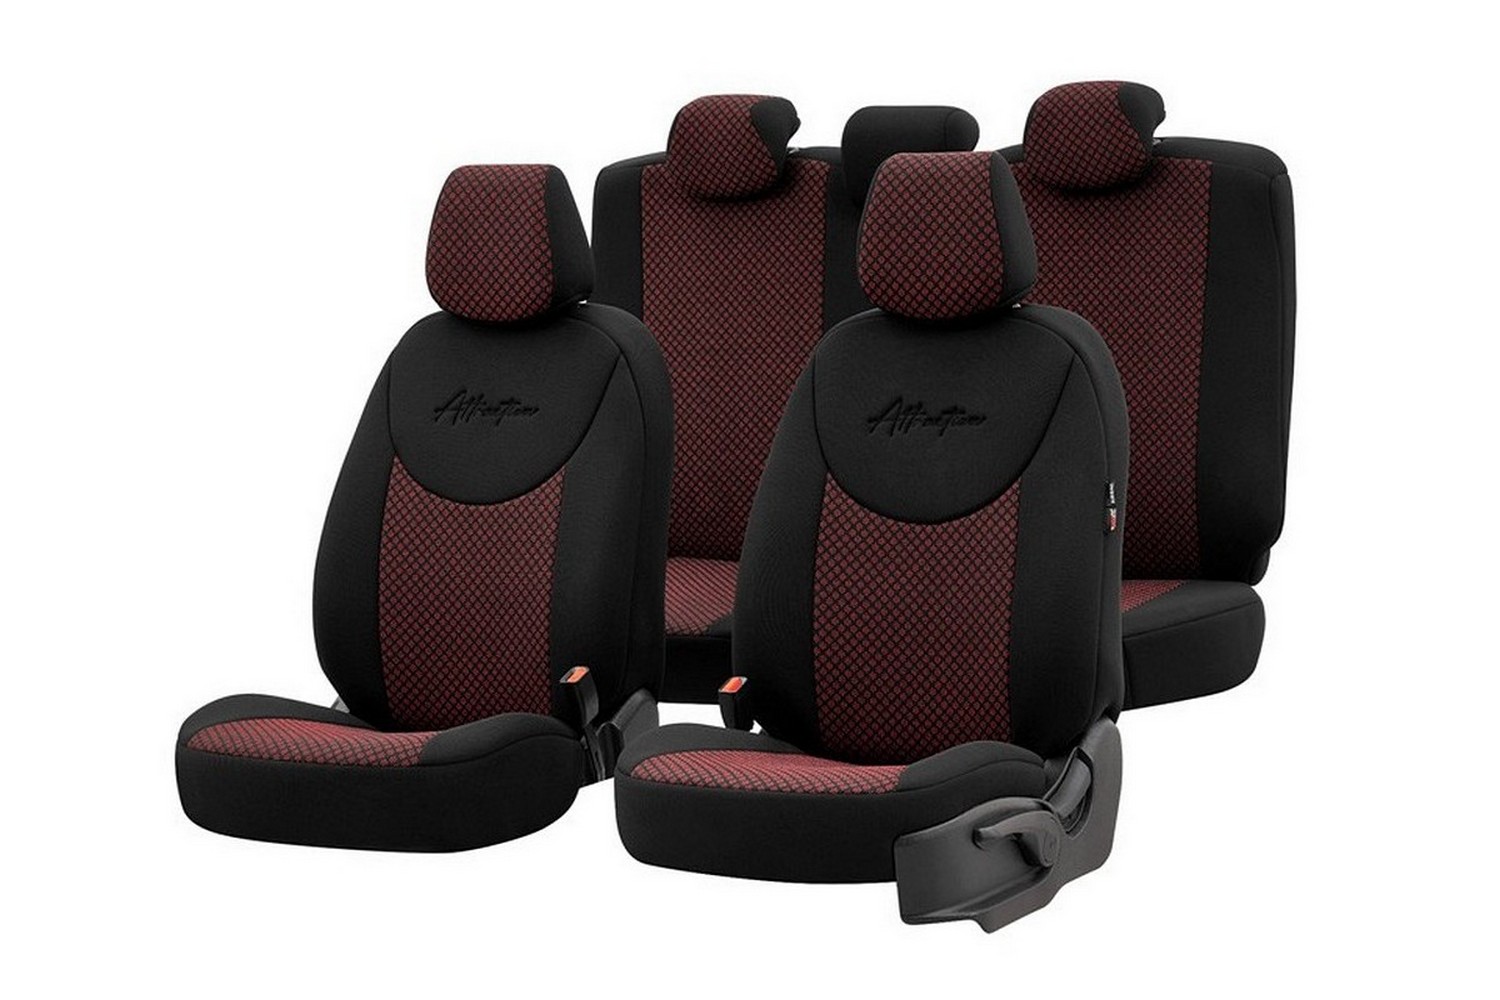 https://www.carparts-expert.com/images/stories/virtuemart/product/UN1OT-2-seat-covers-universal-attraction-black-burgundy-1.jpg